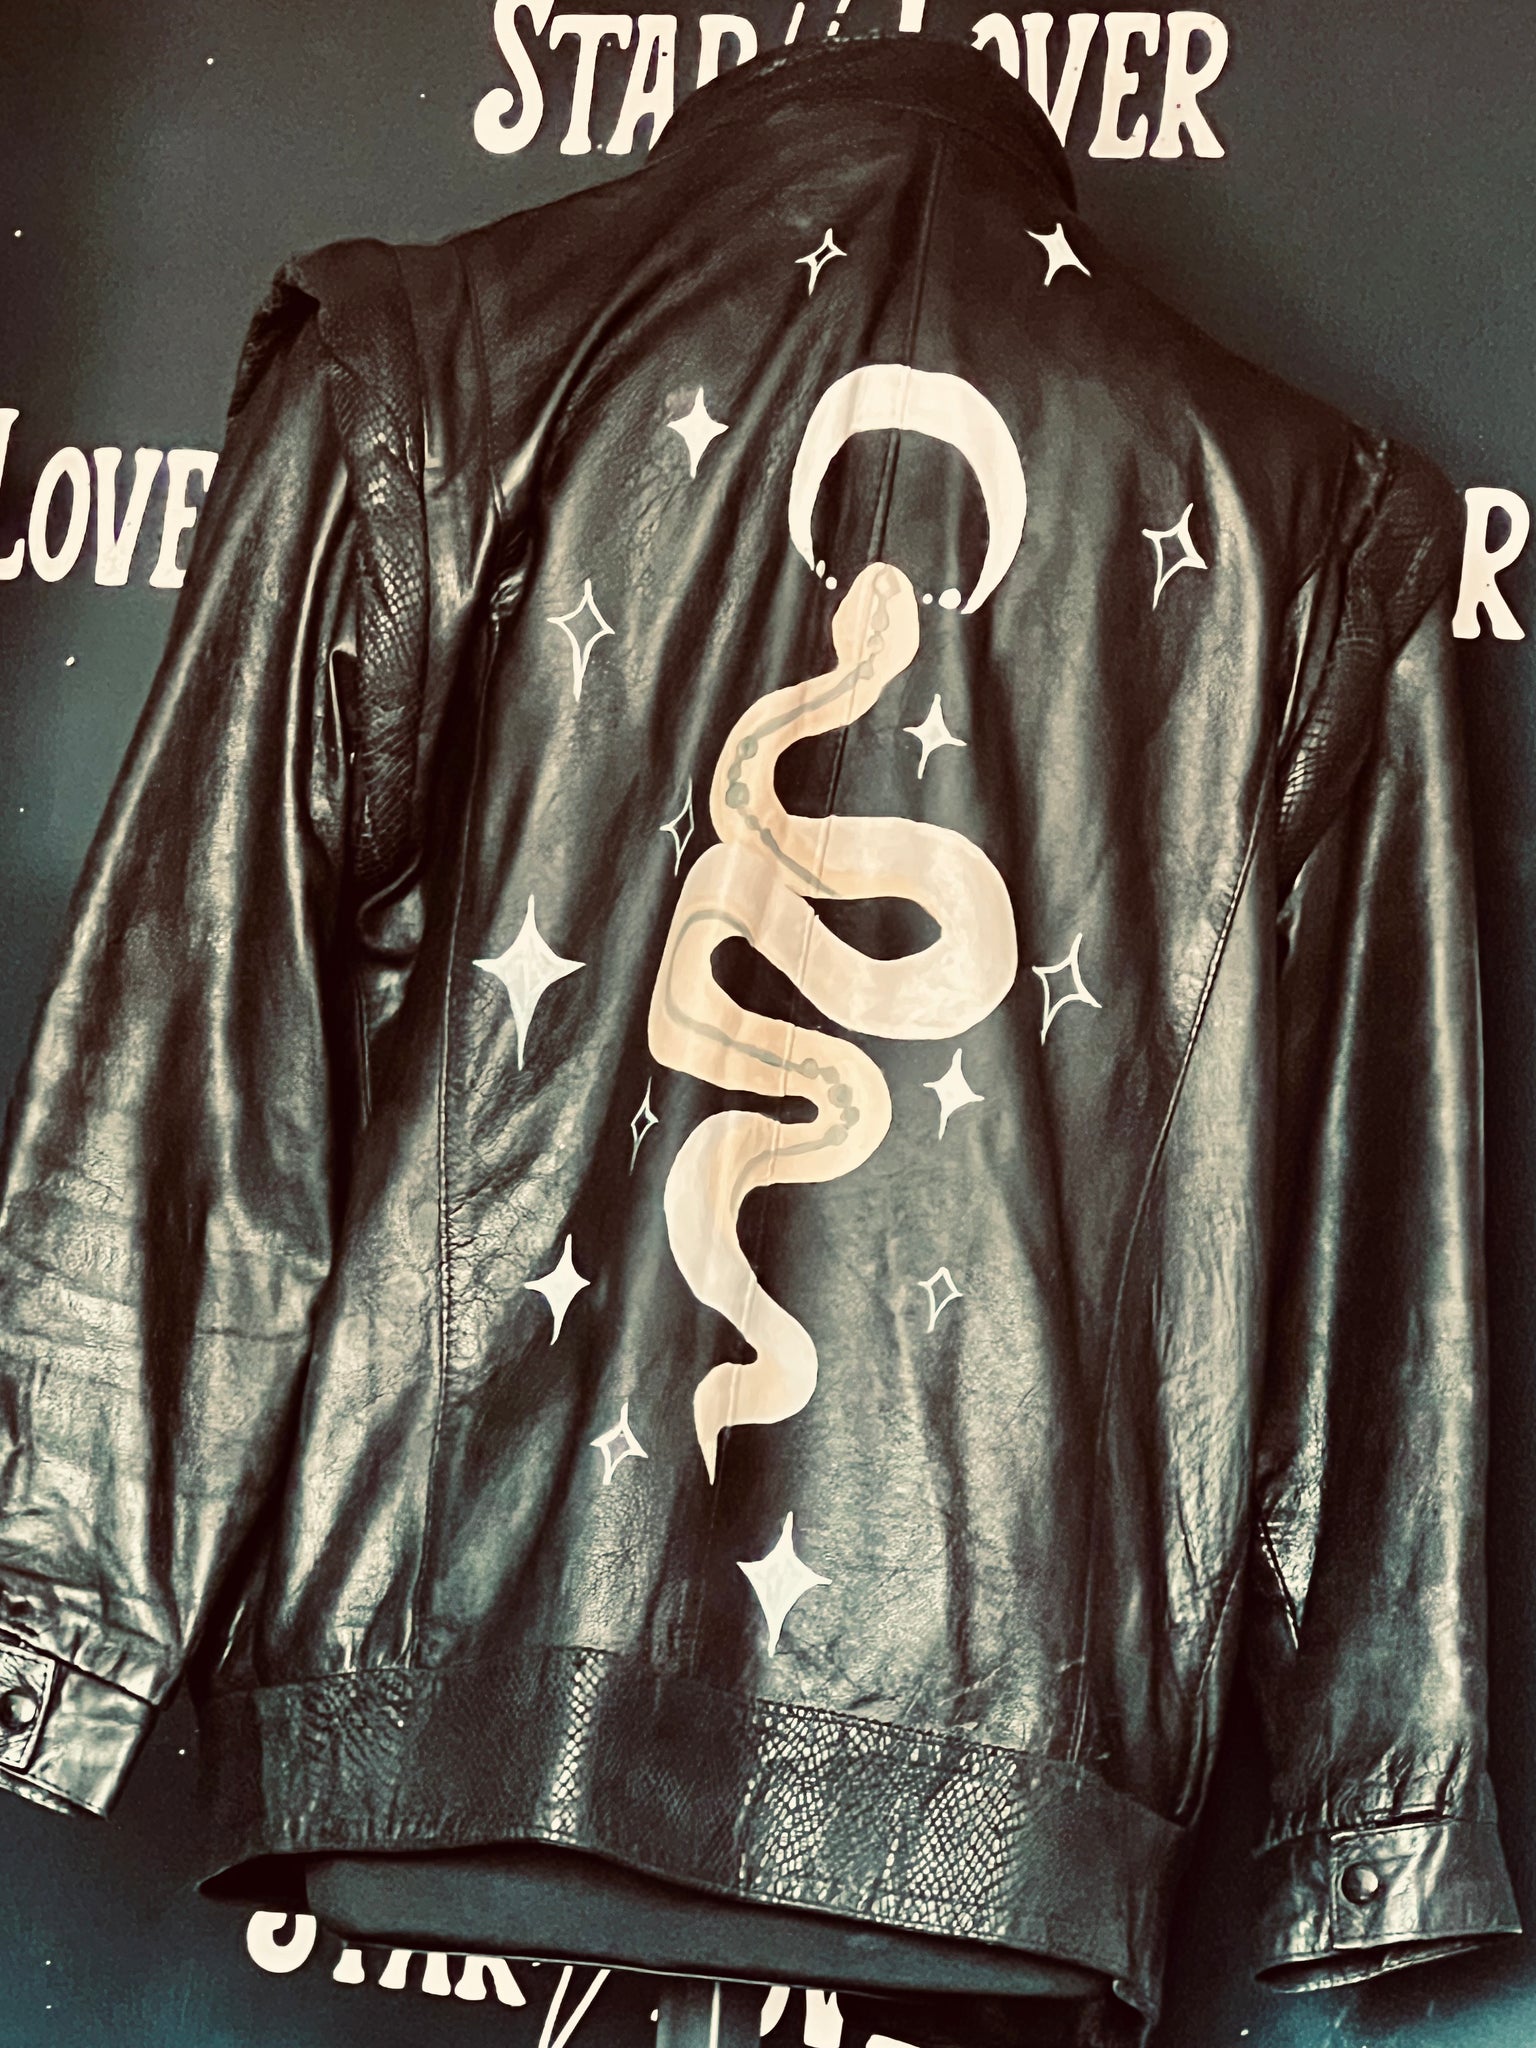 Hand painted vintage snake jacket